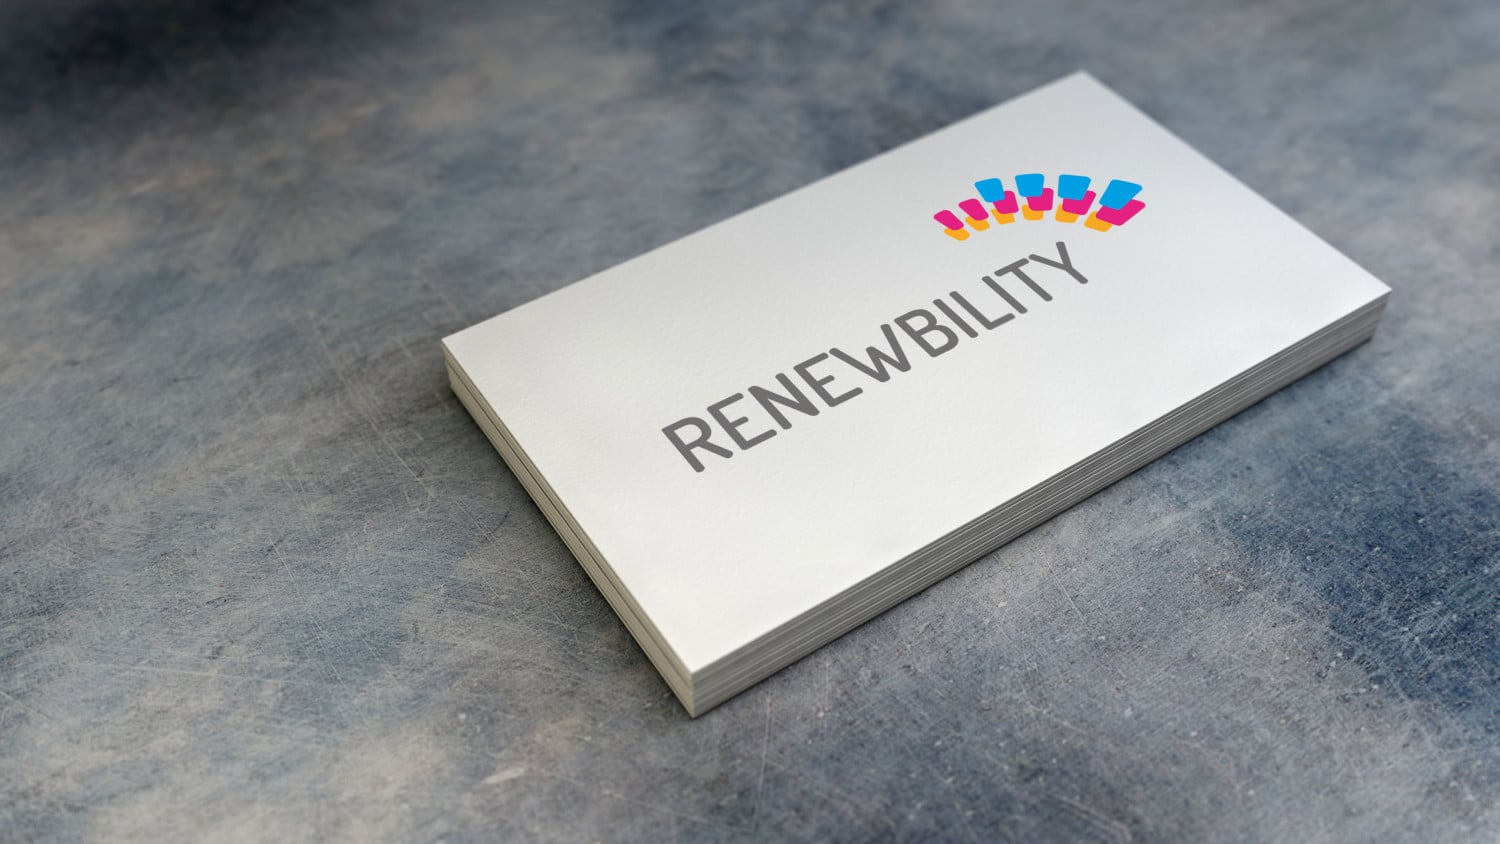 eCouleur Referenz nachhaltiges Design Renewbility Corporate Design Logo